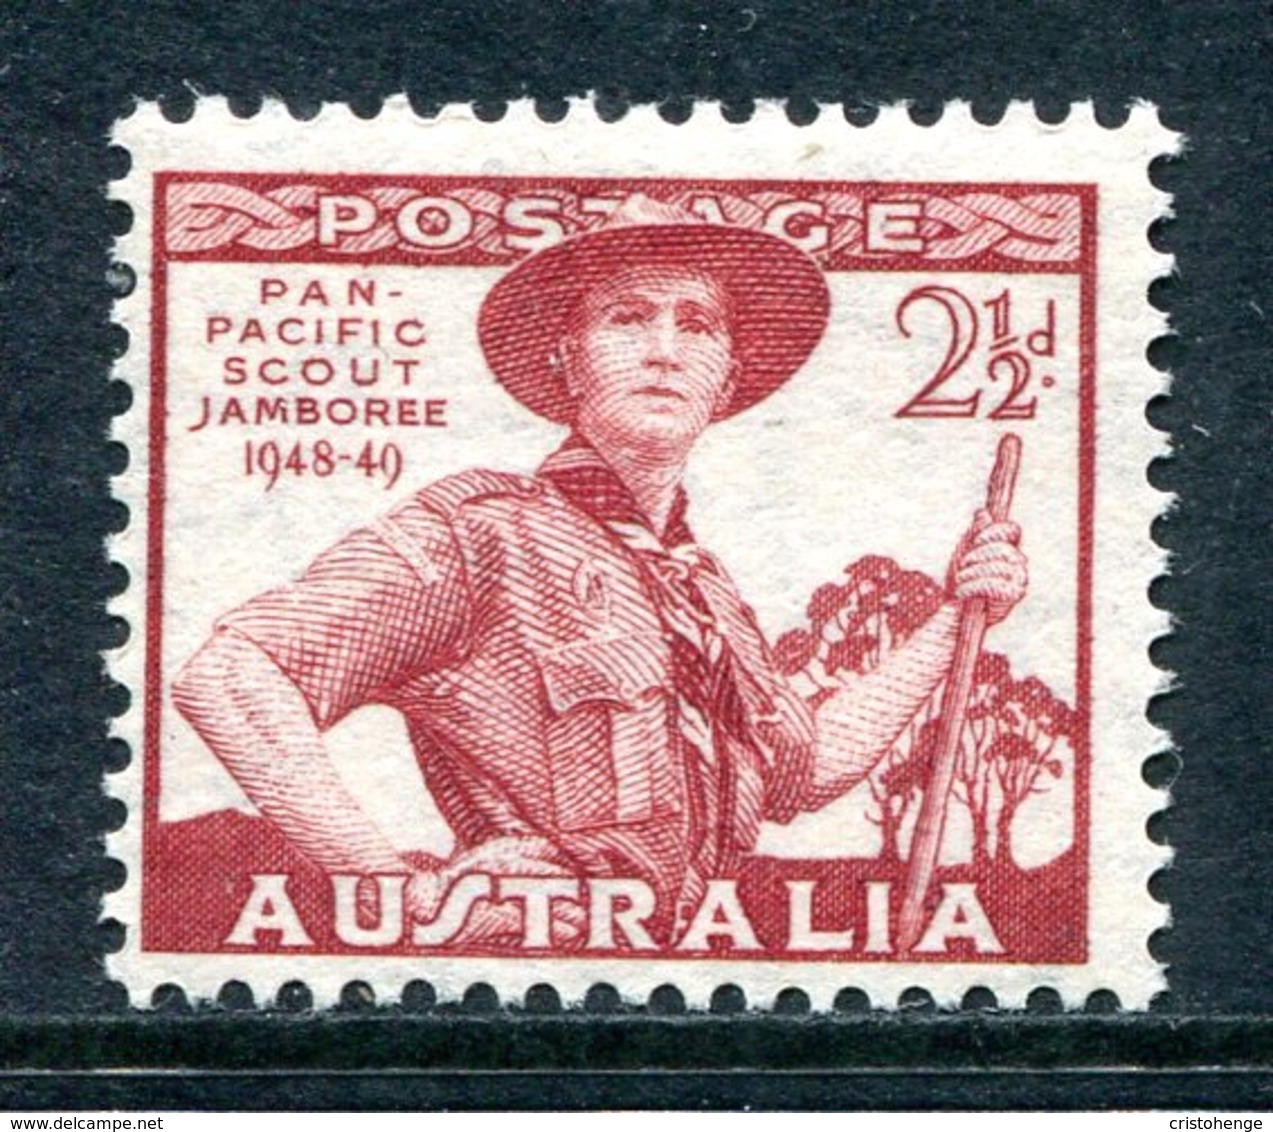 Australia 1948 Pan-Pacific Scout Jamboree MNH (SG 227) - Mint Stamps